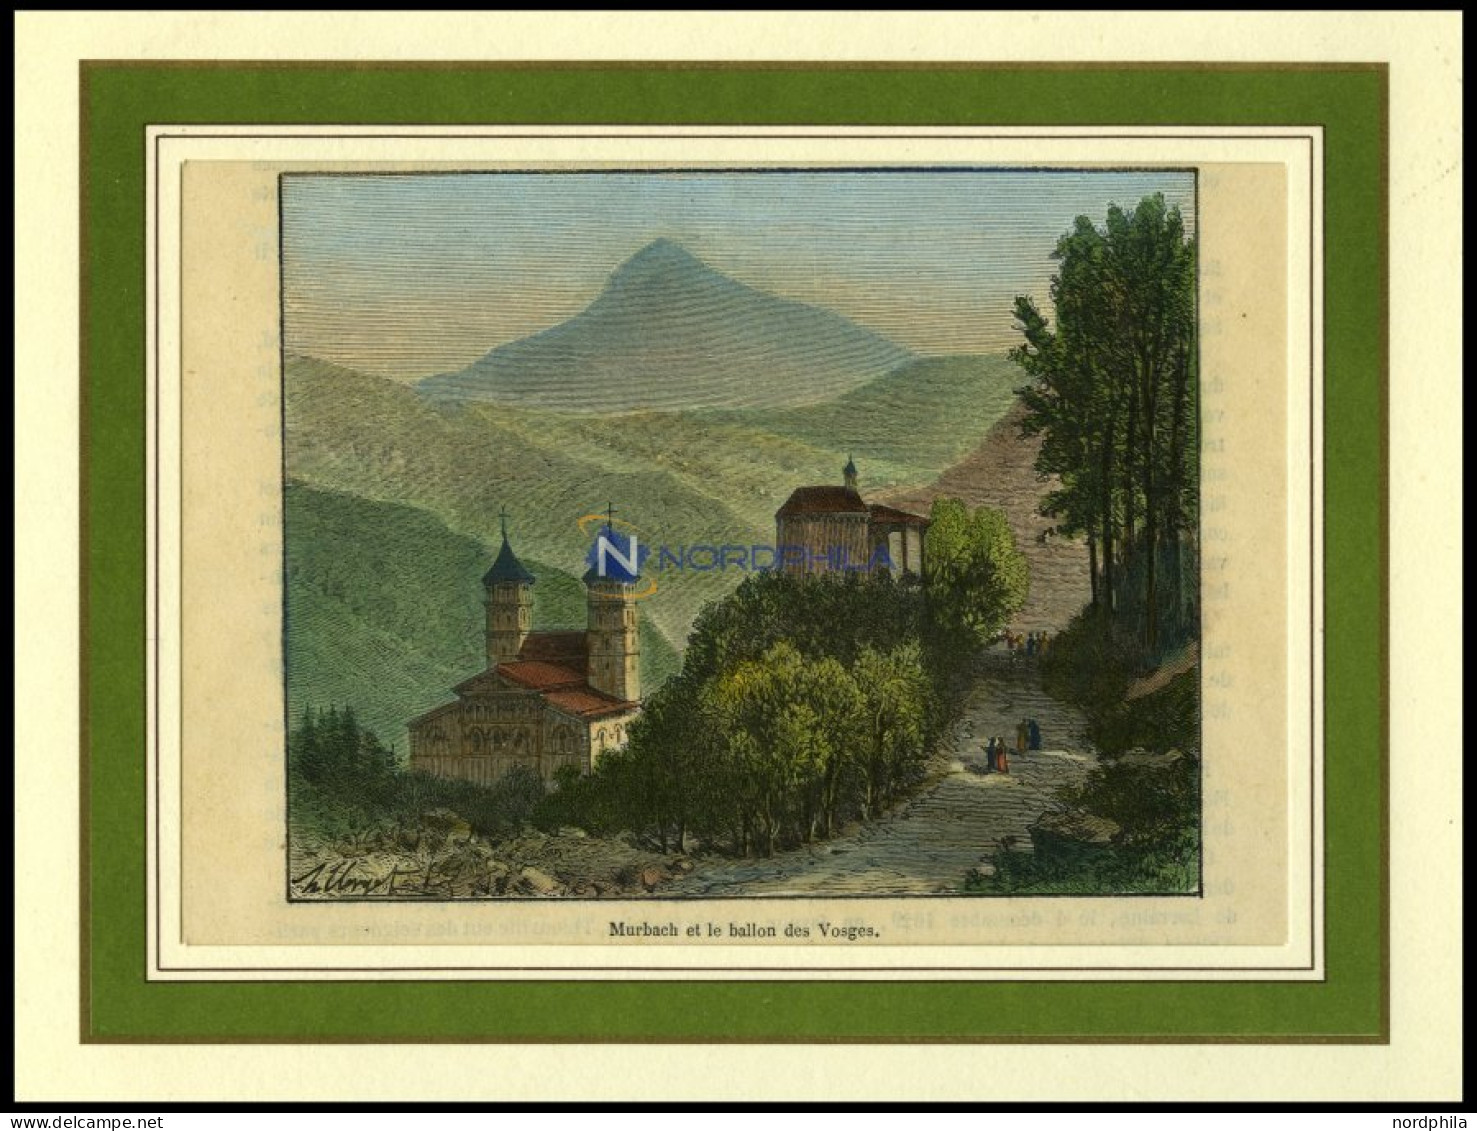 MURBACH, Gesamtansicht, Kolorierter Holzstich Aus Malte-Brun Um 1880 - Lithographies